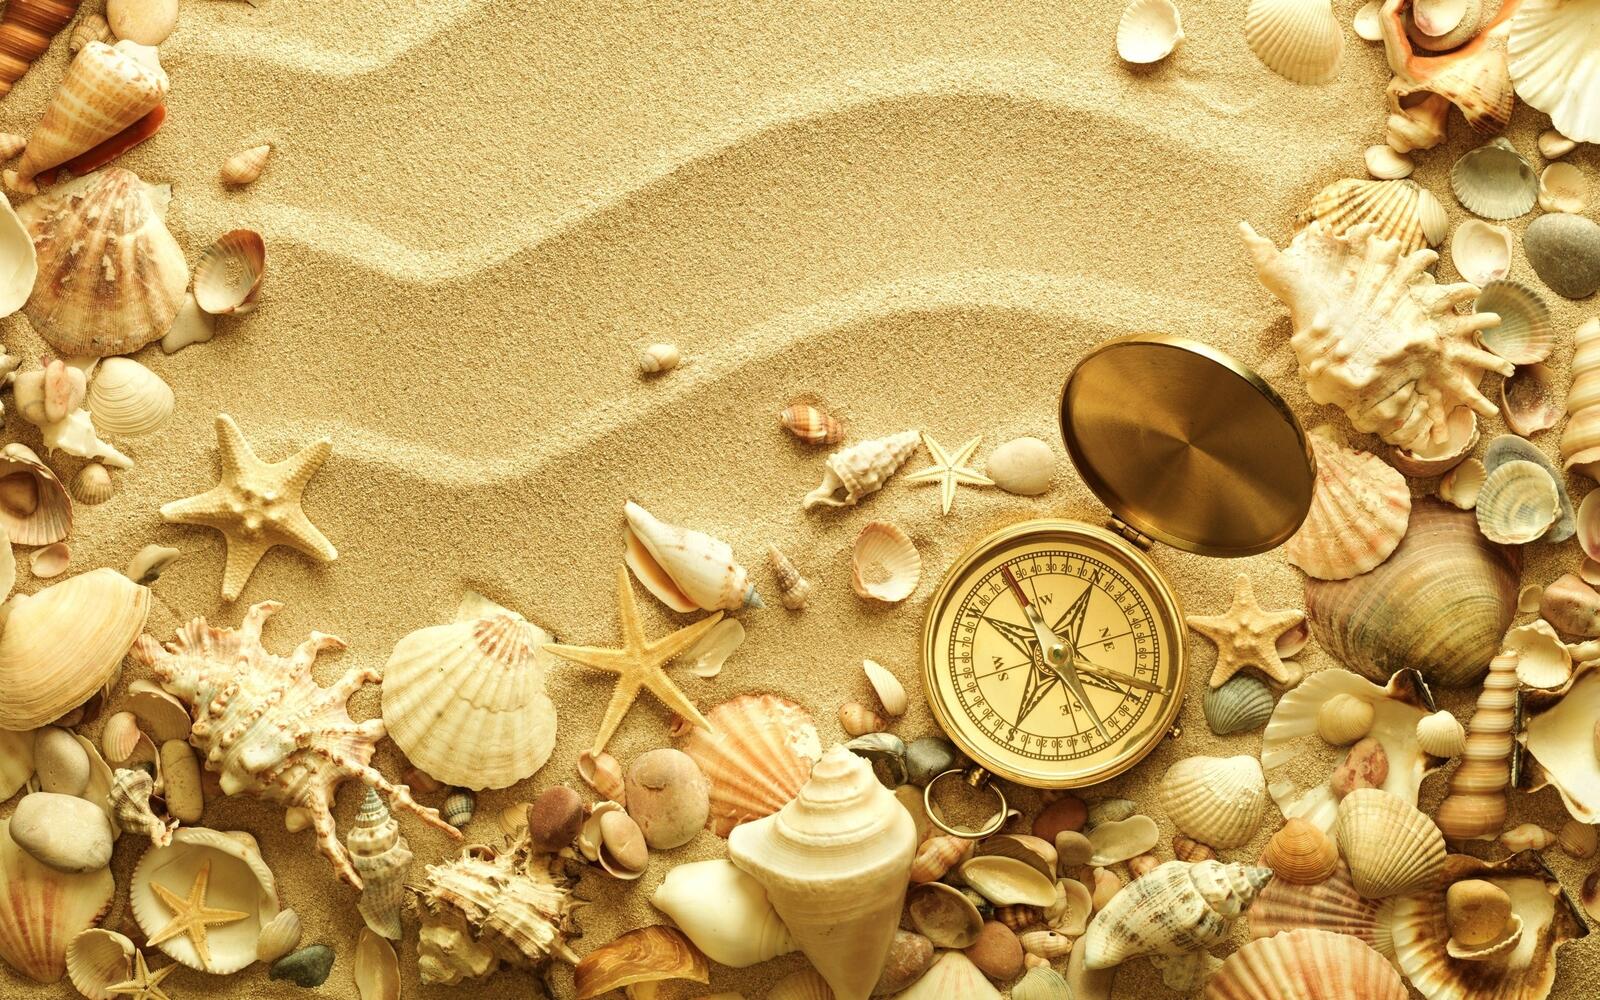 Бесплатное фото Компас и ракушки на песке